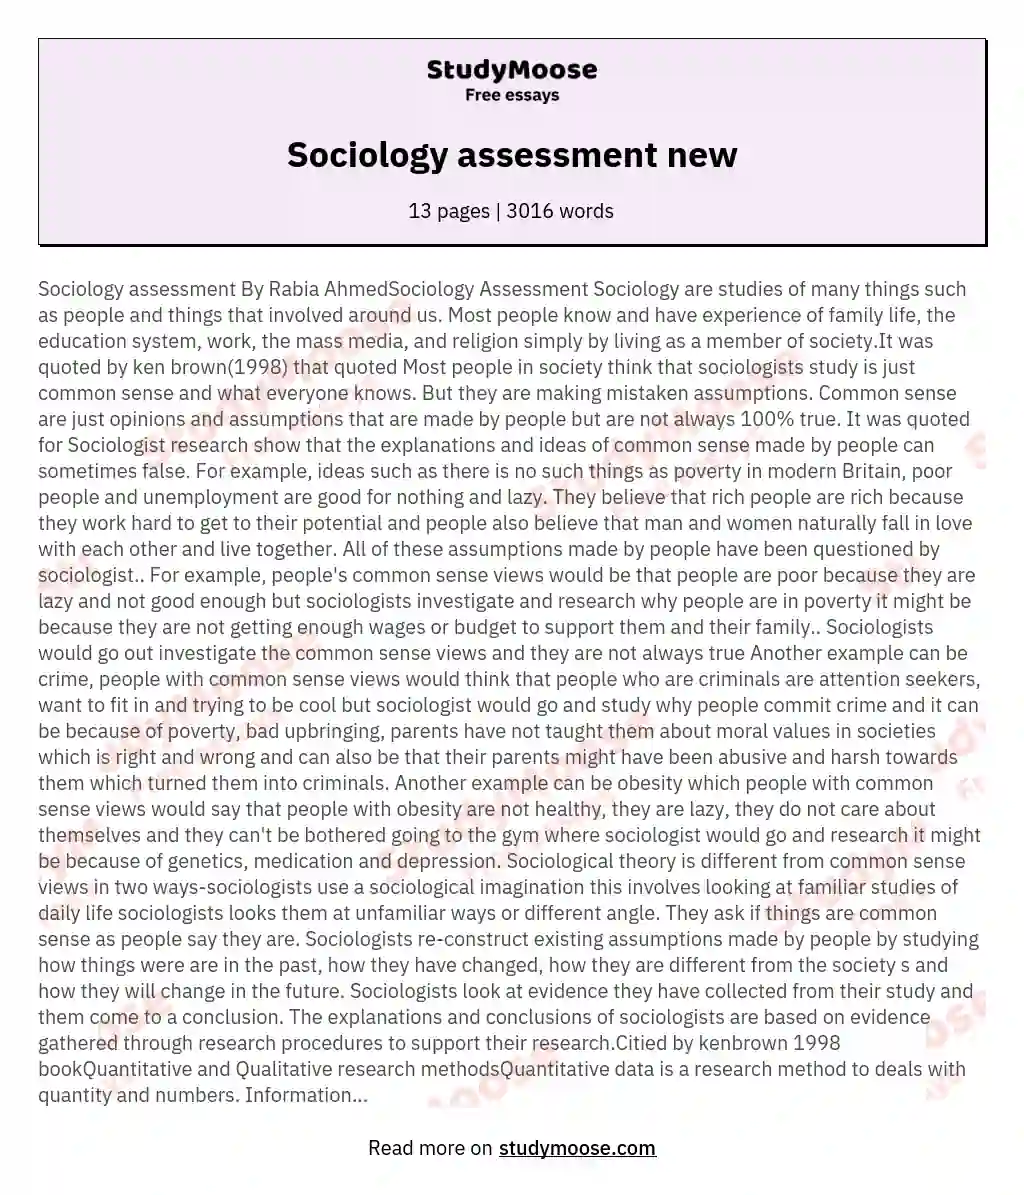 Sociology assessment new essay